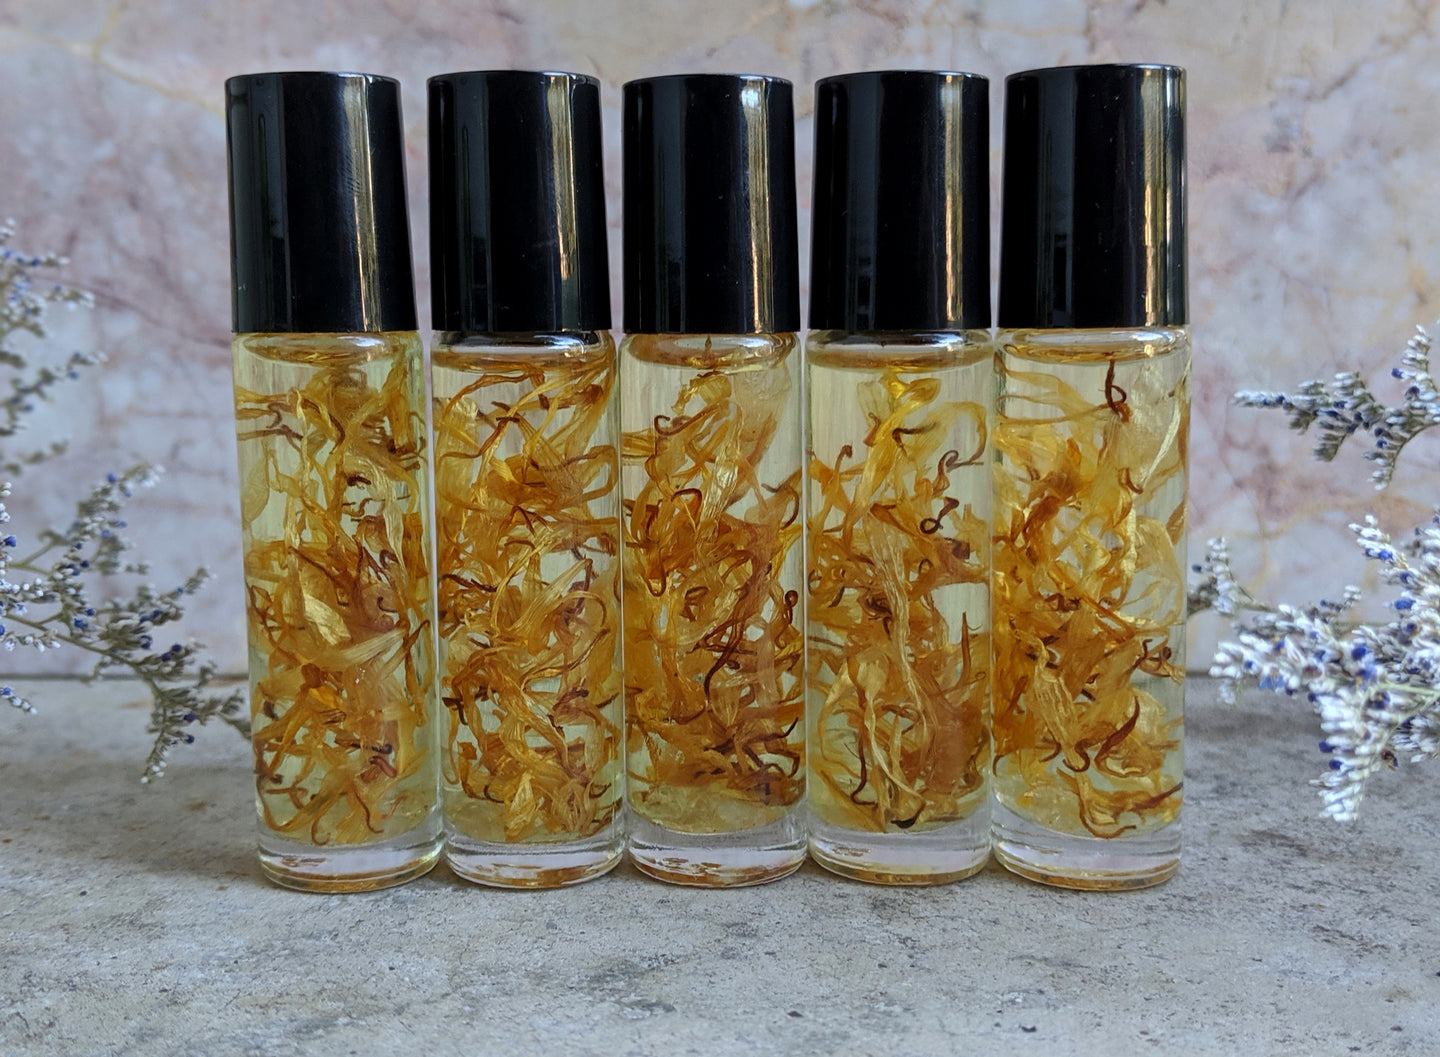 Honeysuckle 10ml Perfume Roller